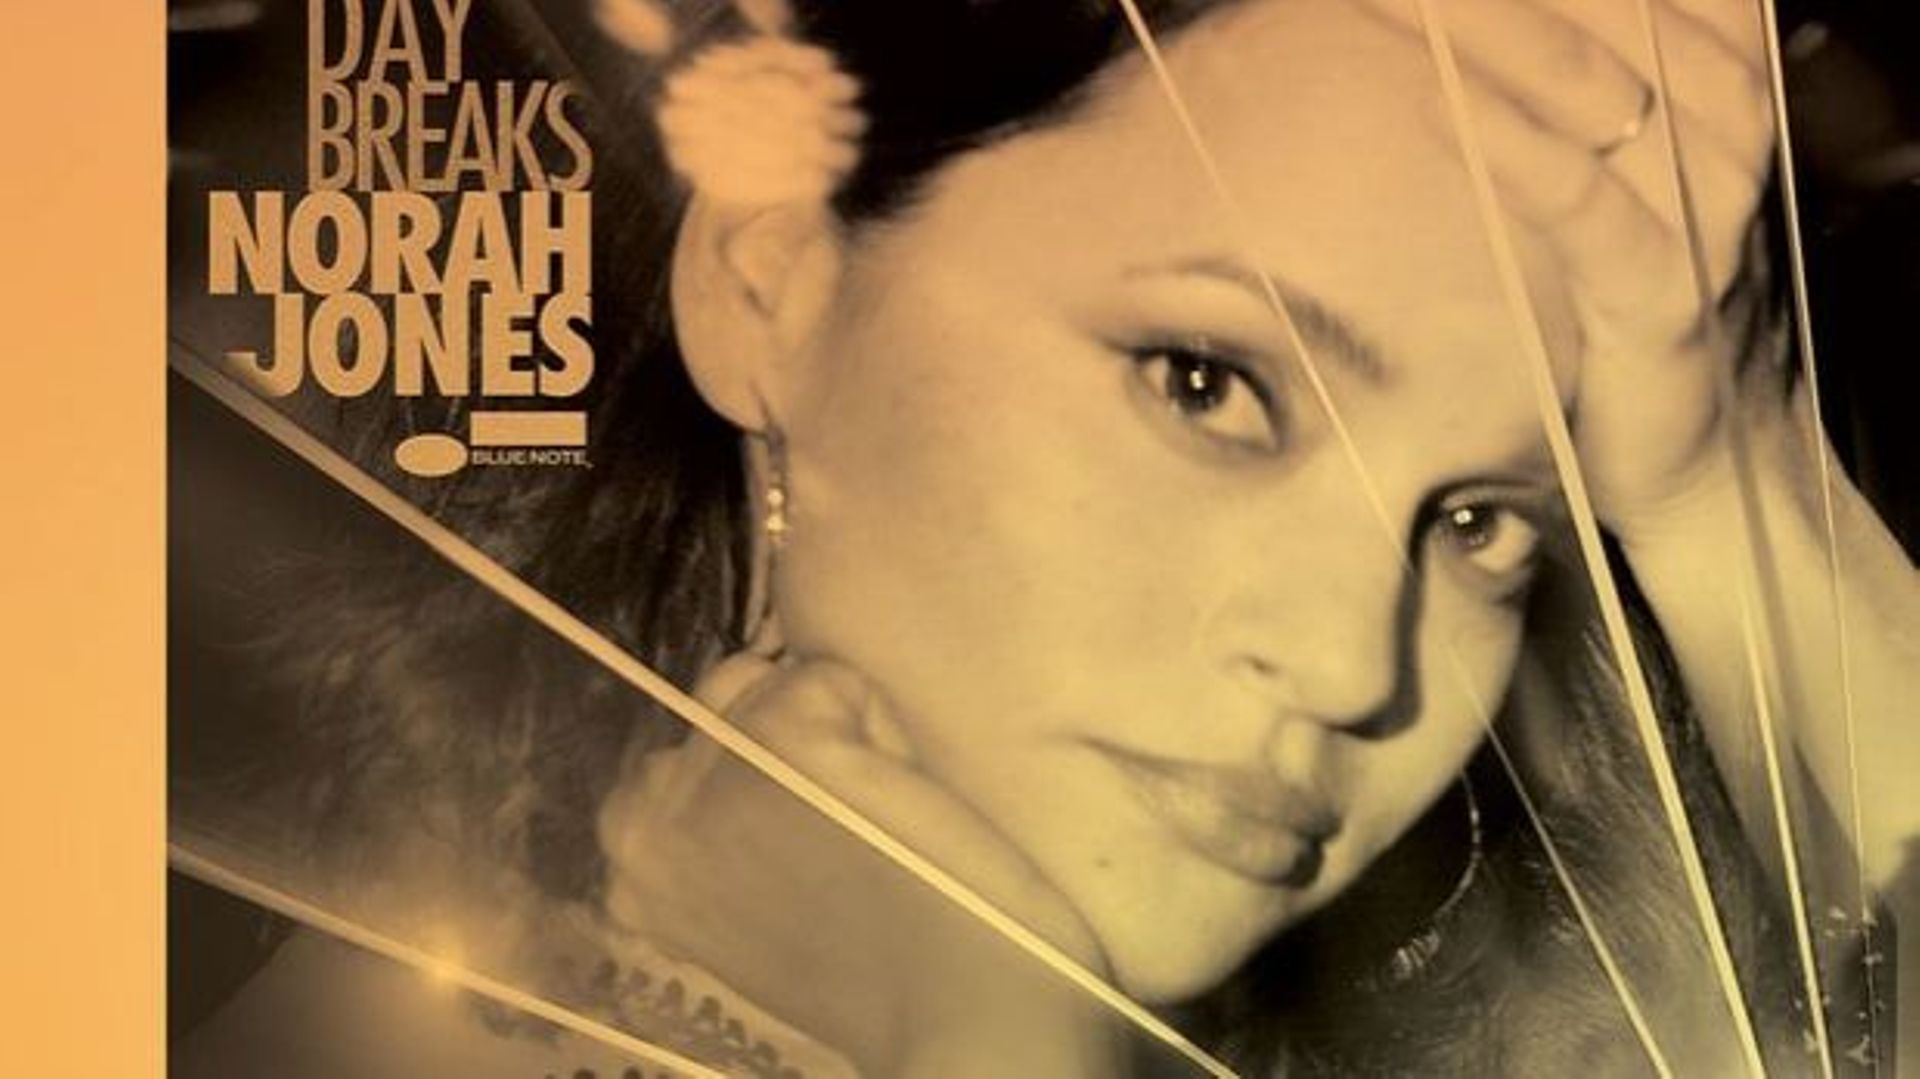 Norah Jones, "Day breaks" (Blue Note/Universal)